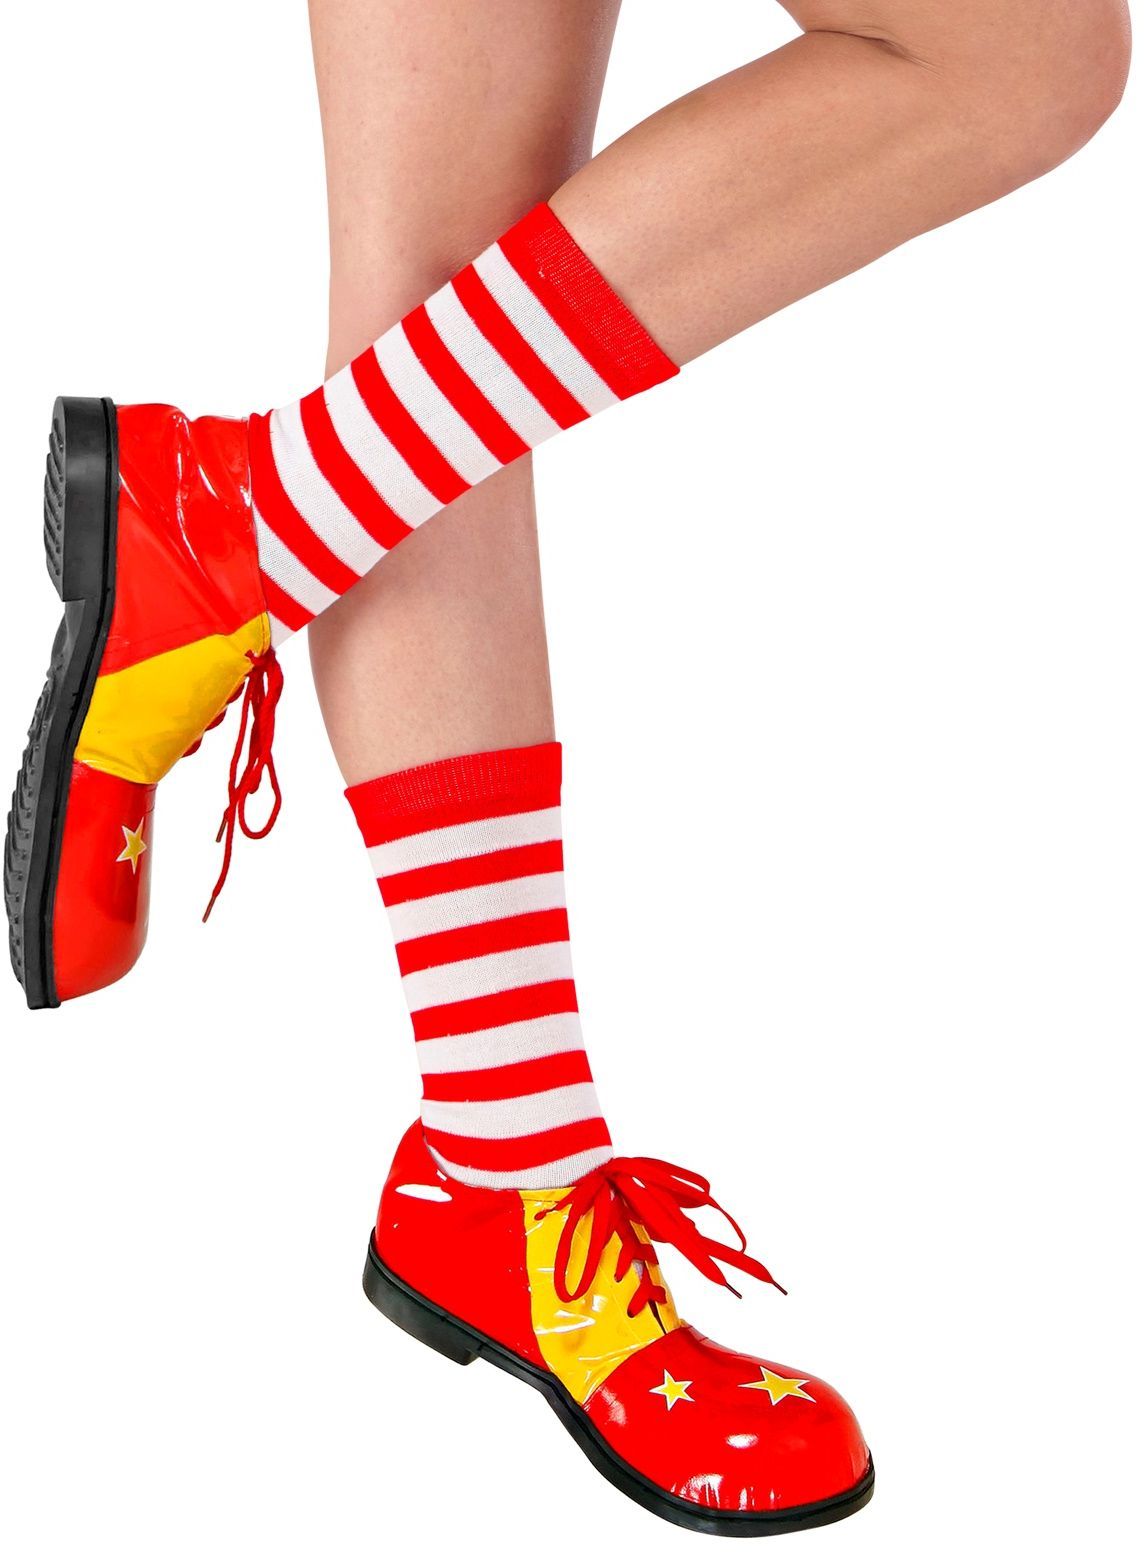 Korte rood wit gestreepte sokken